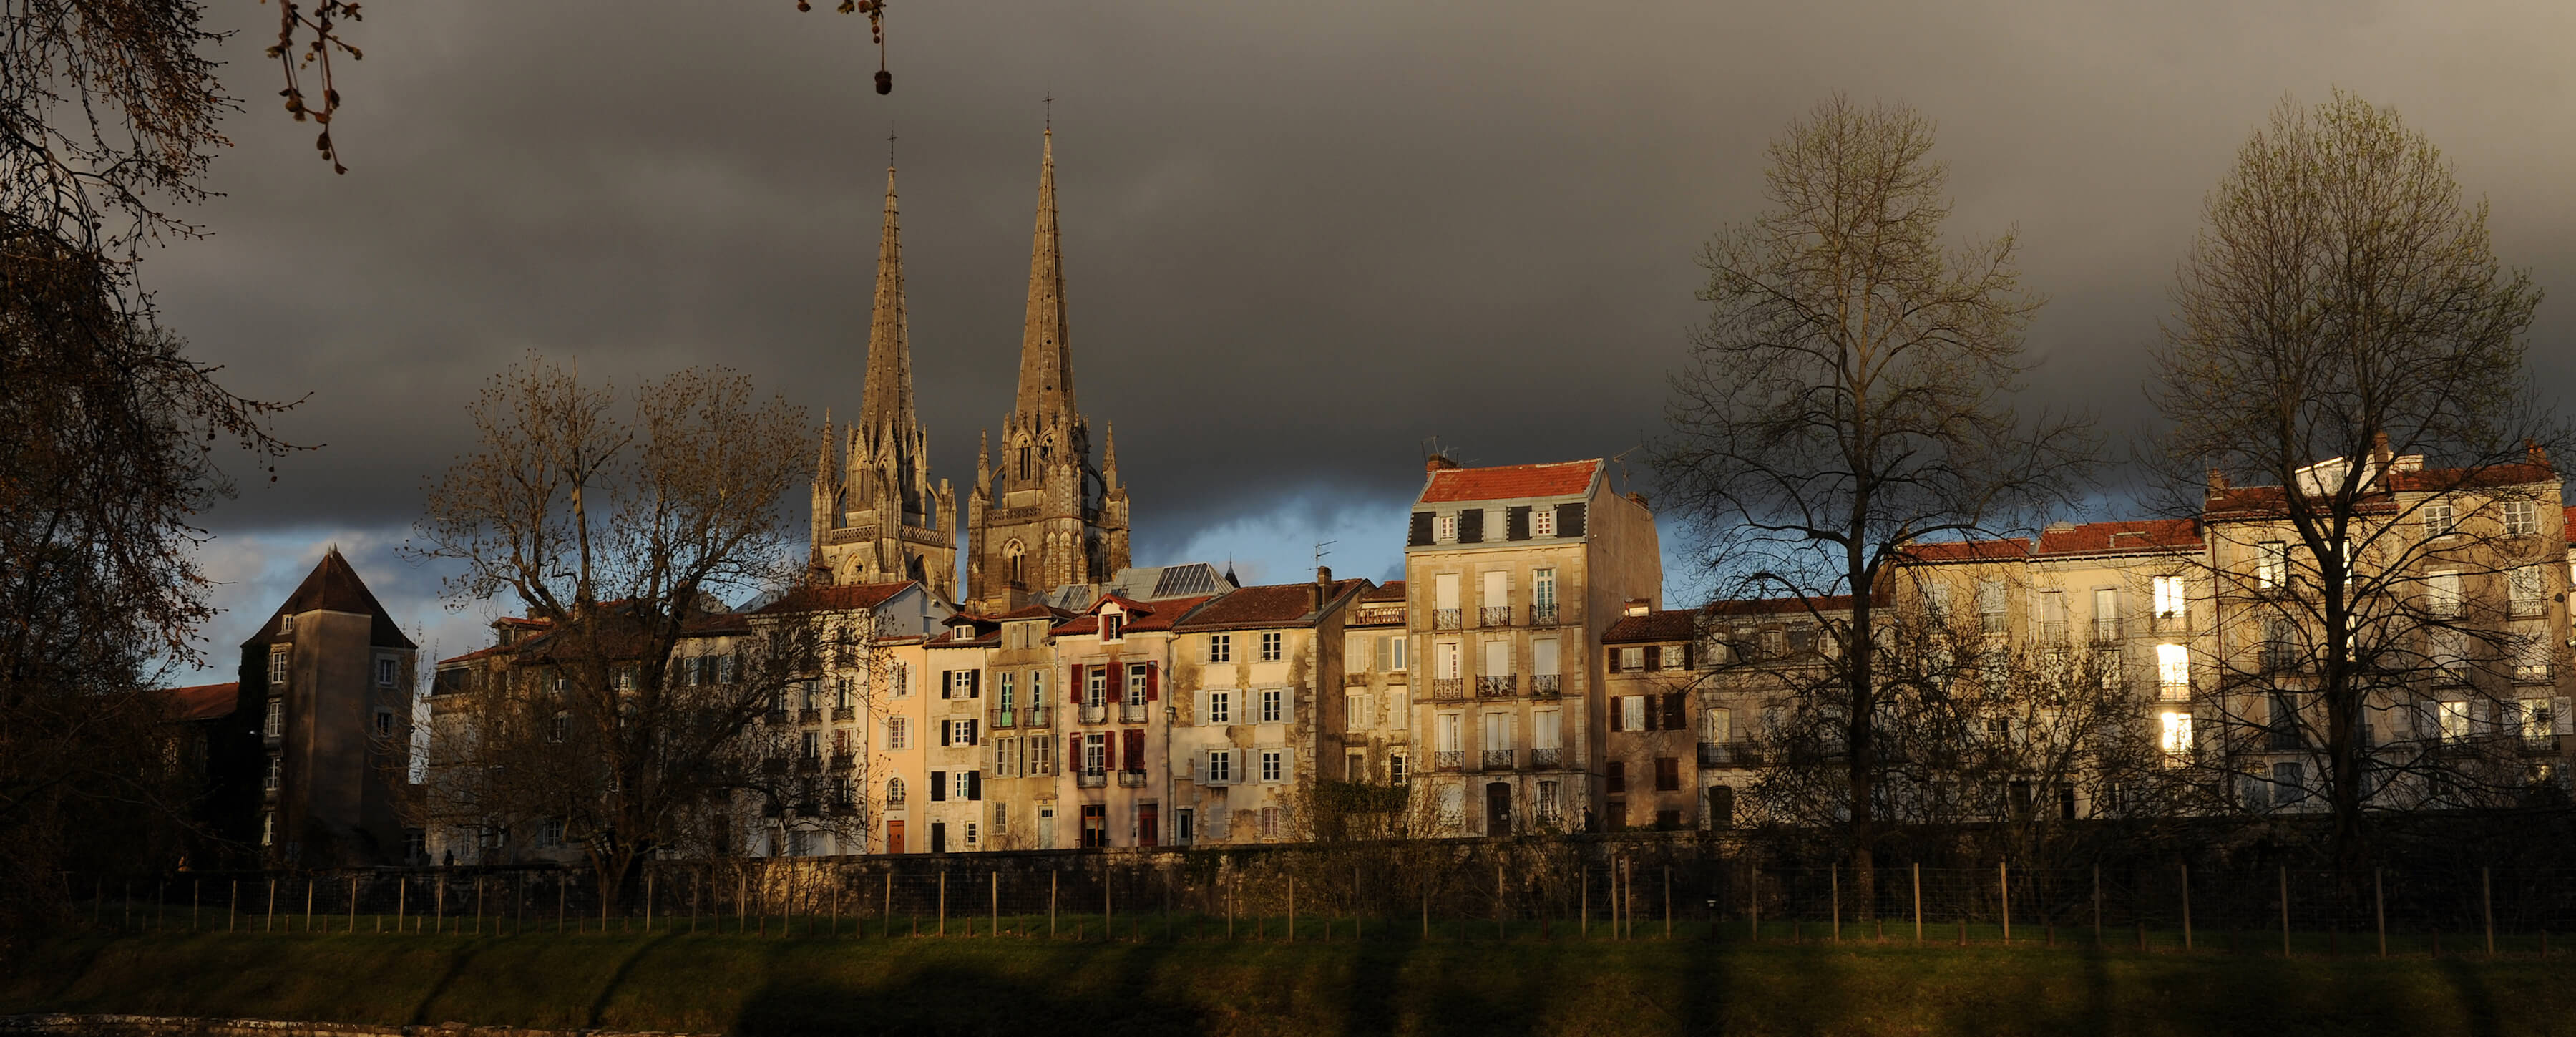 Cathédrale Sainte-Marie©ACIR / JJ Gelbart